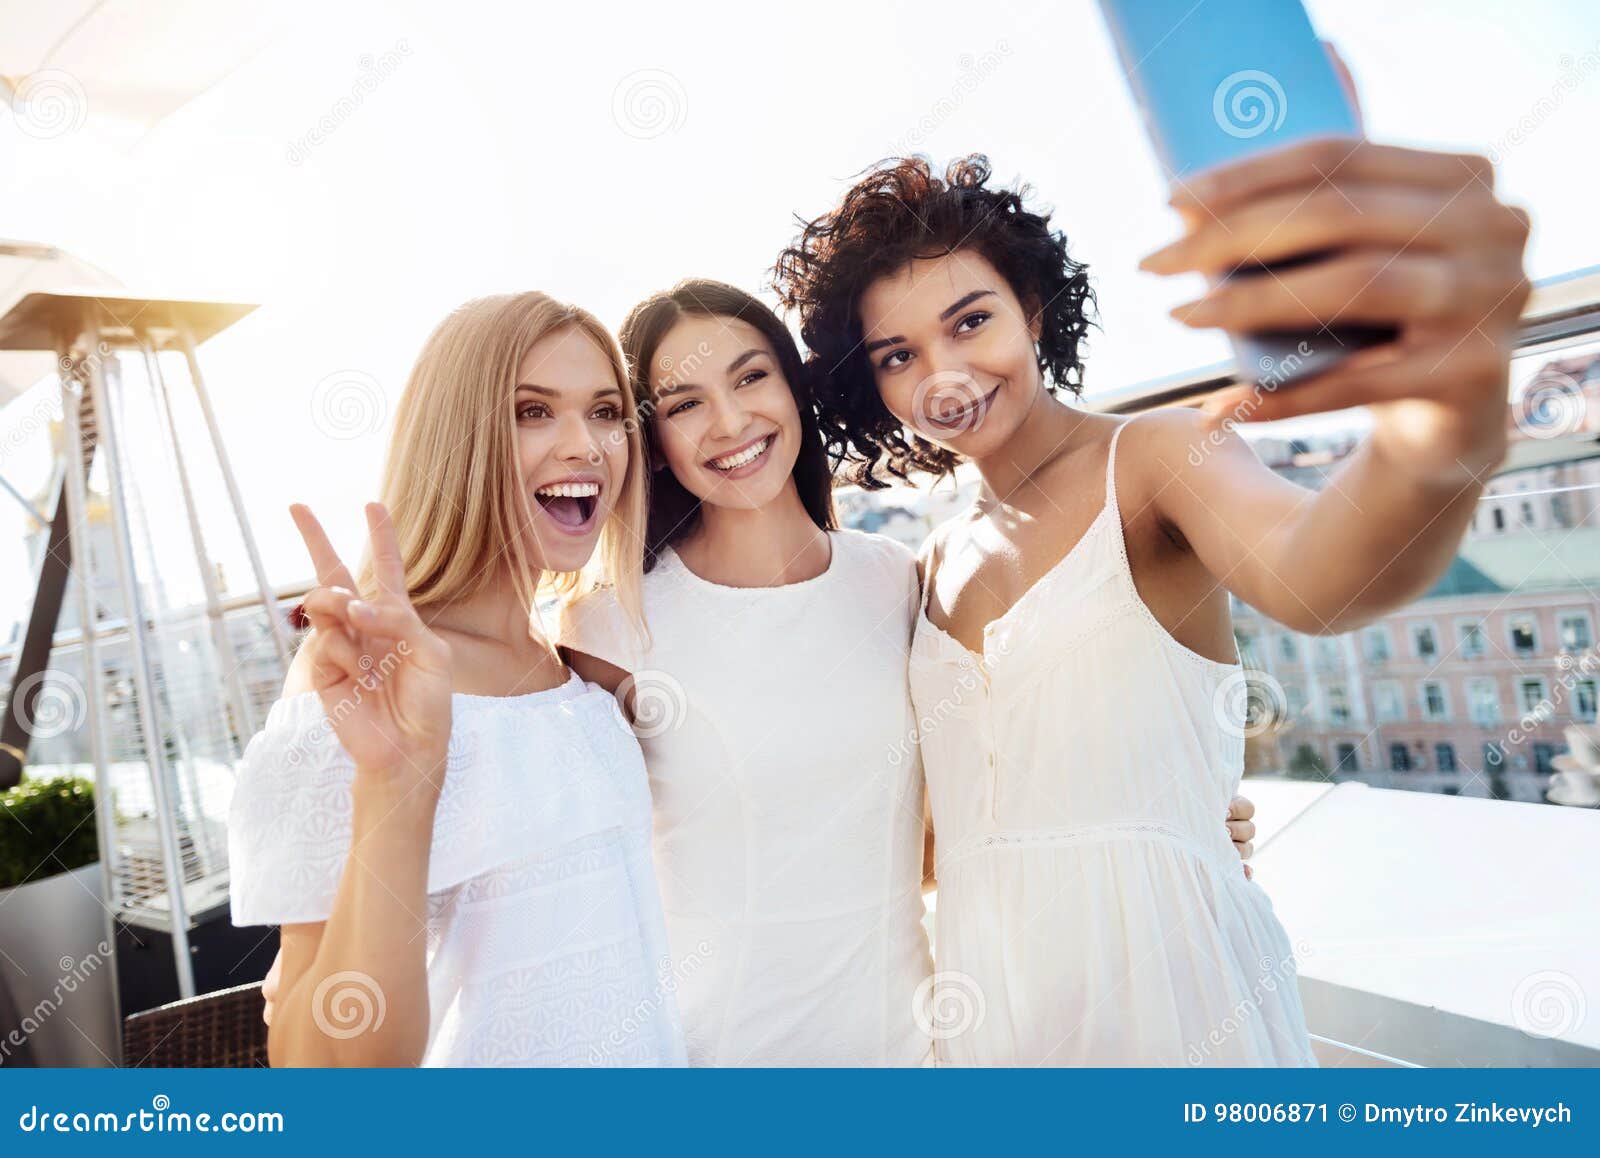 Happy Joyful Women Posing for a Photo Stock Image - Image of femininity ...